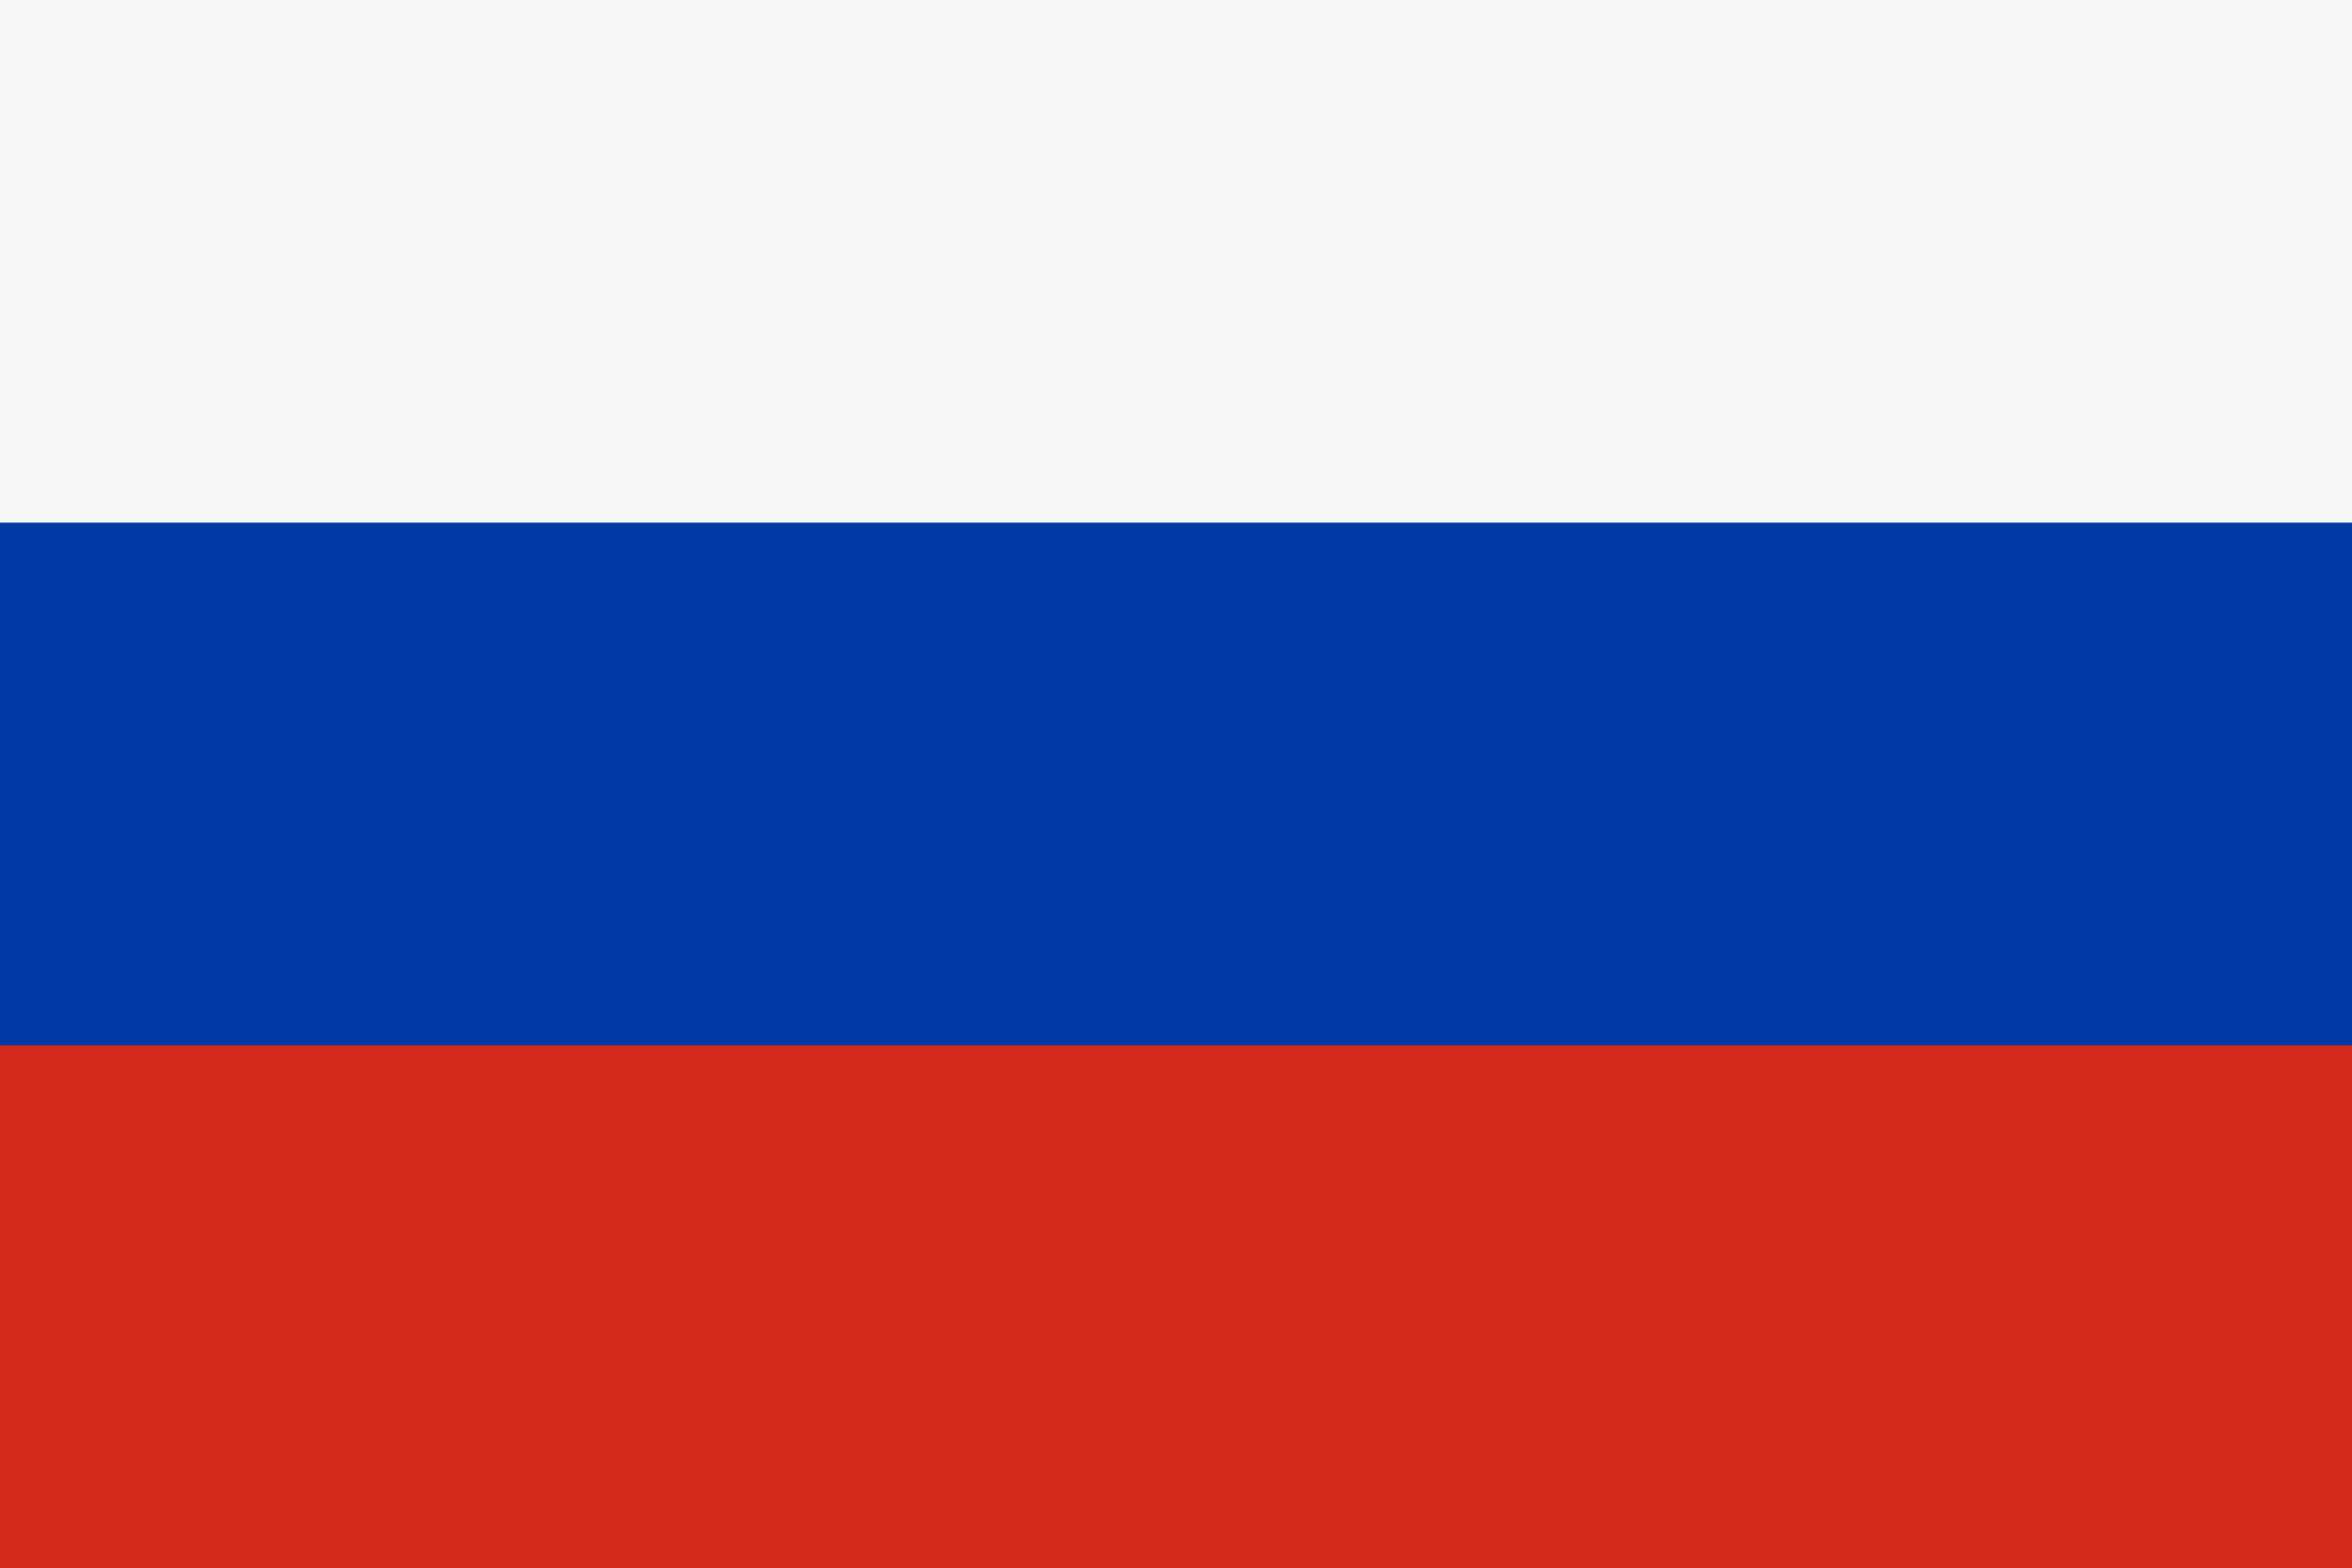 The Russia Flag by AdamStanislav